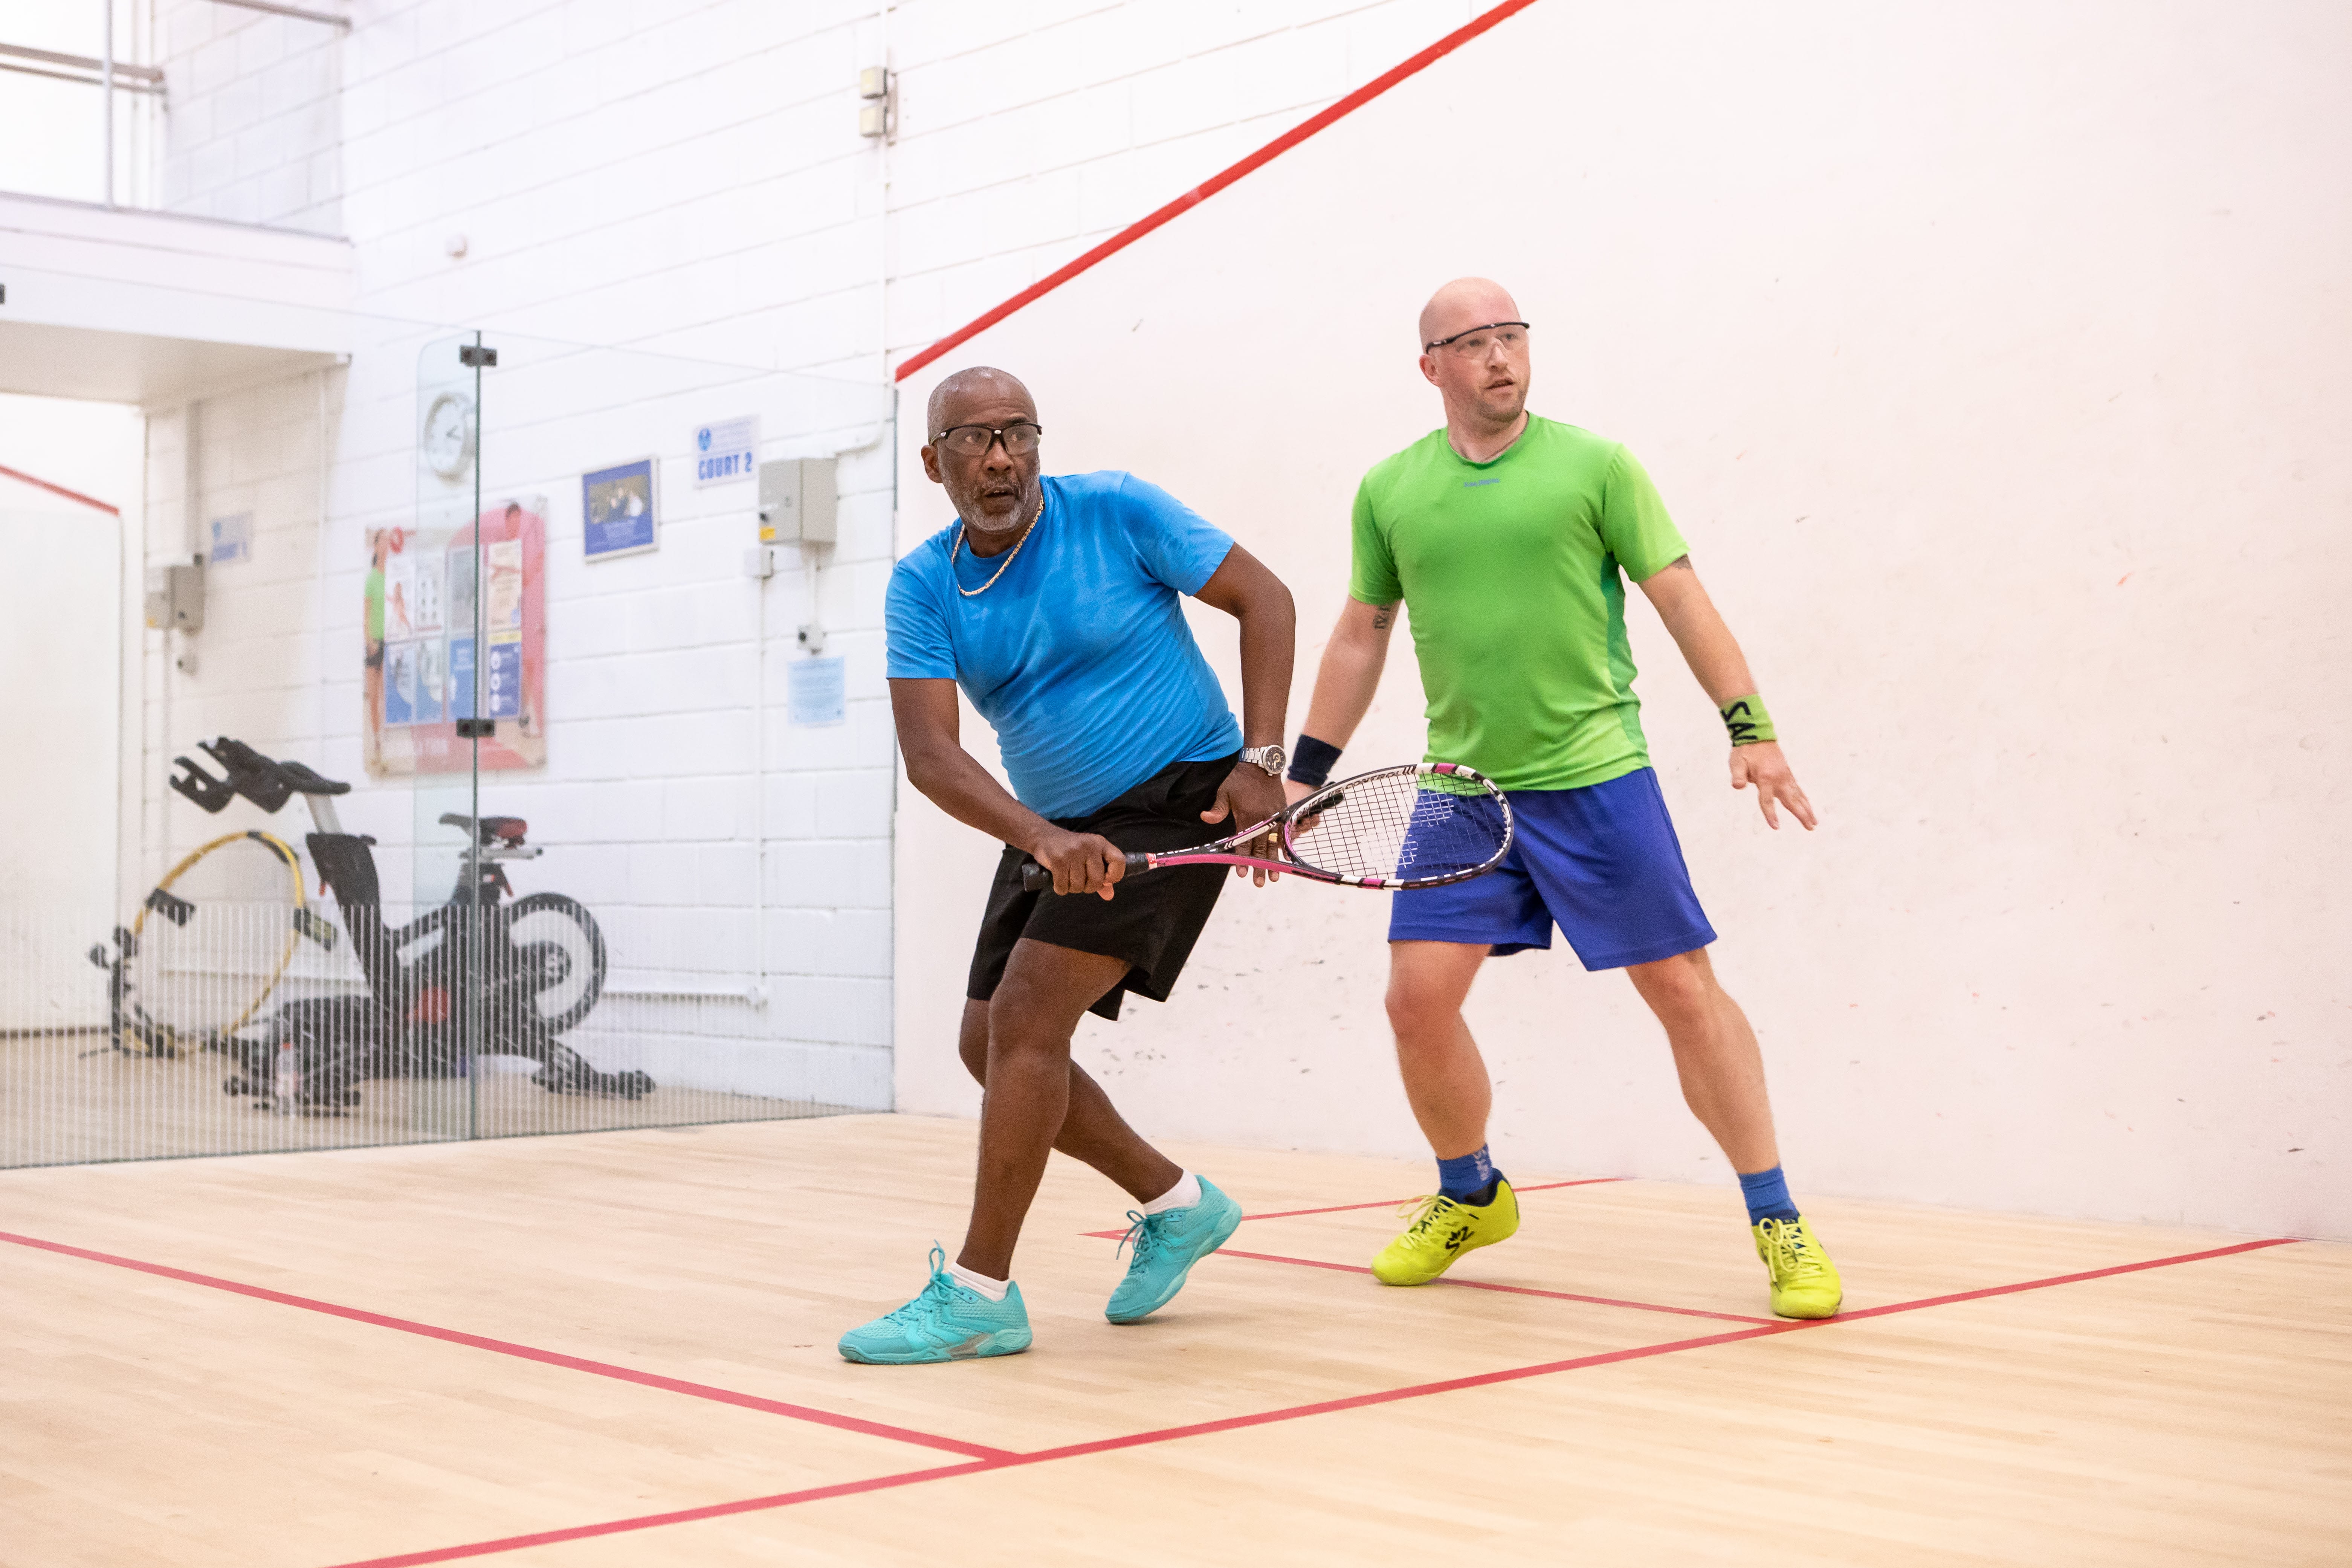 Adult squash players